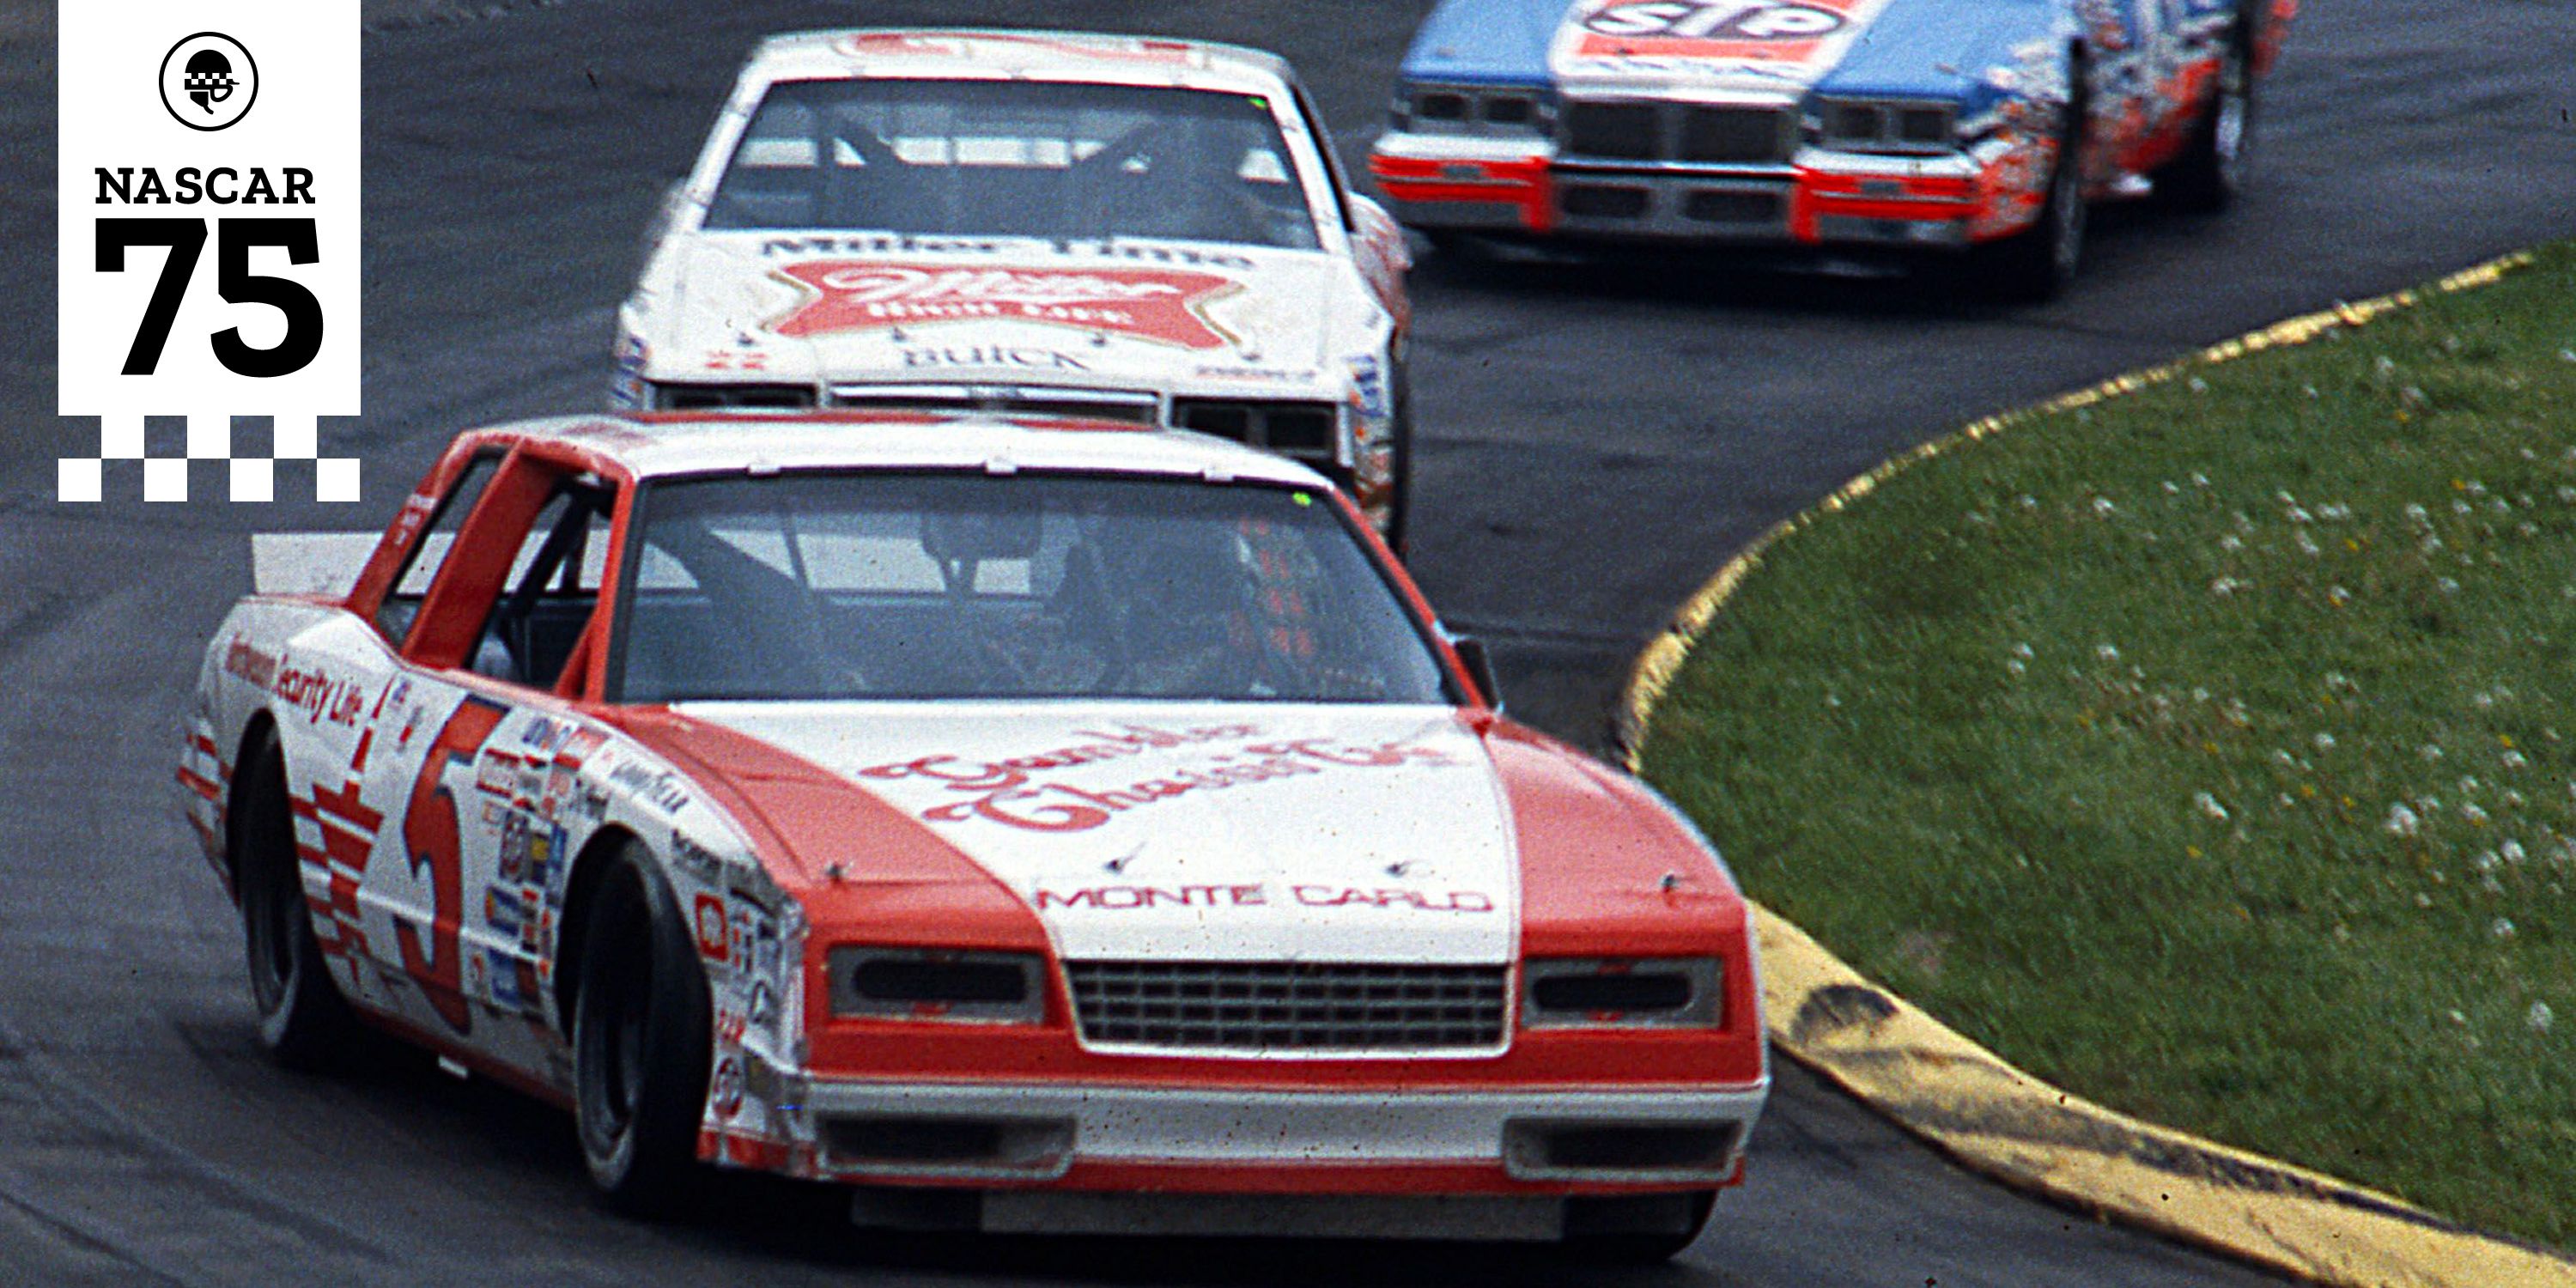 How Geoffrey Bodine's 1984 NASCAR Win Kept Team Owner Rick Hendrick in the Game